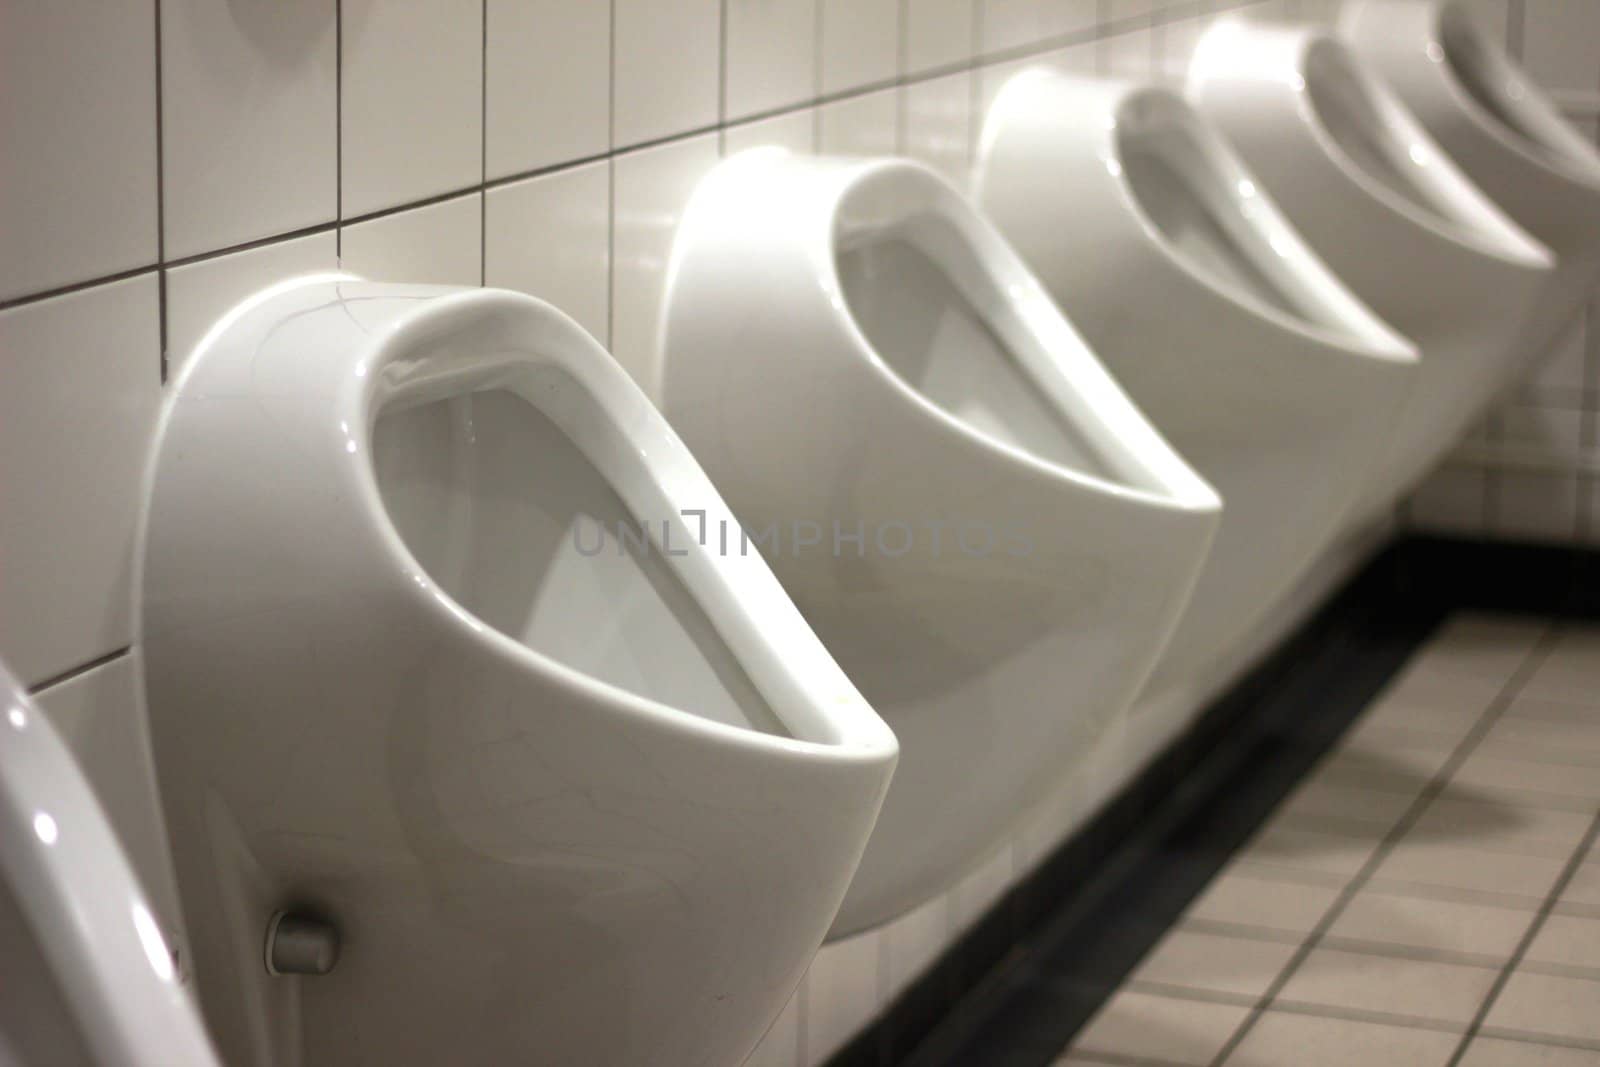 plain urinals by Teka77